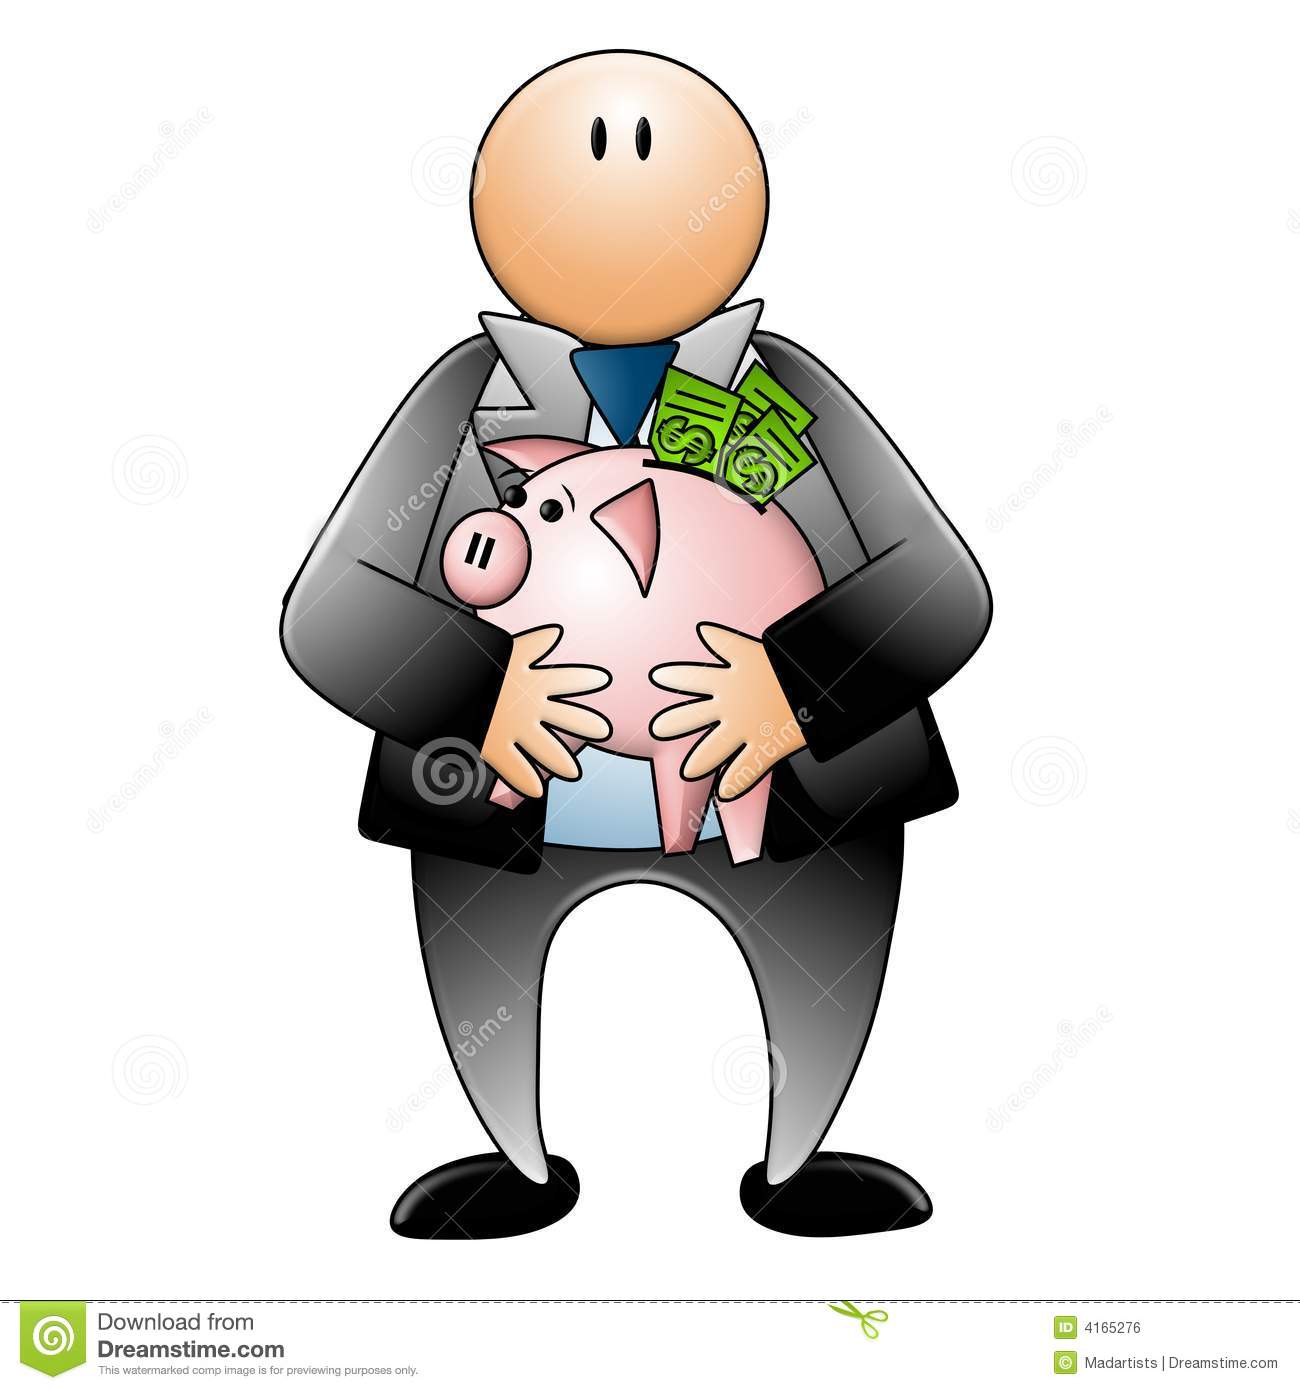 Man Holding Piggy Bank Dollar Bills Royalty Free Stock Image   Image